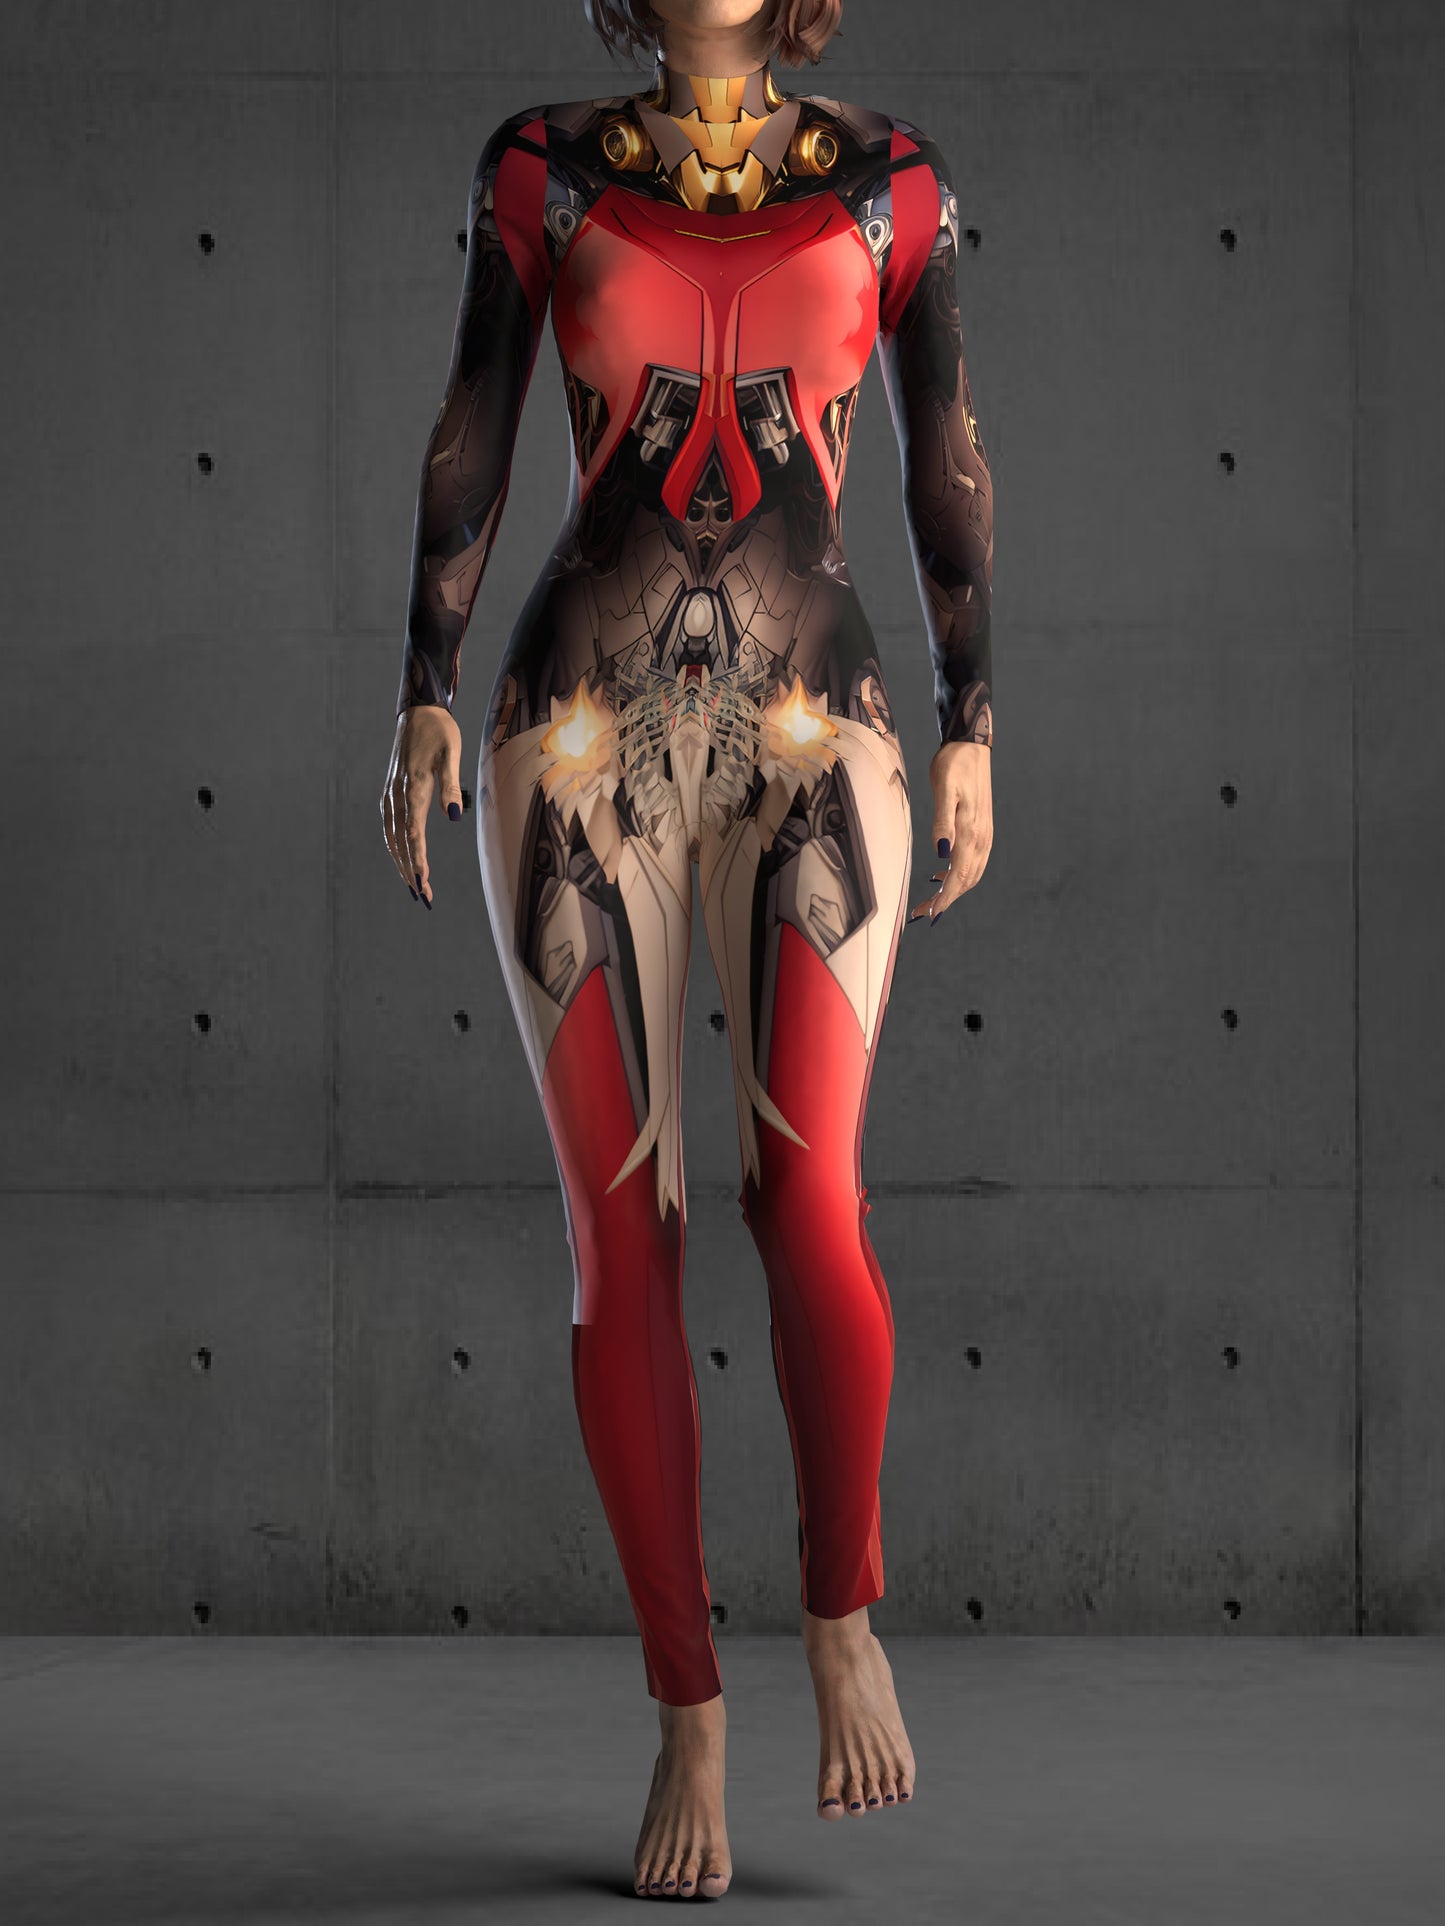 Cyberpunk Halloween Costume Woman, Festival Bodysuit, Rave Outfit